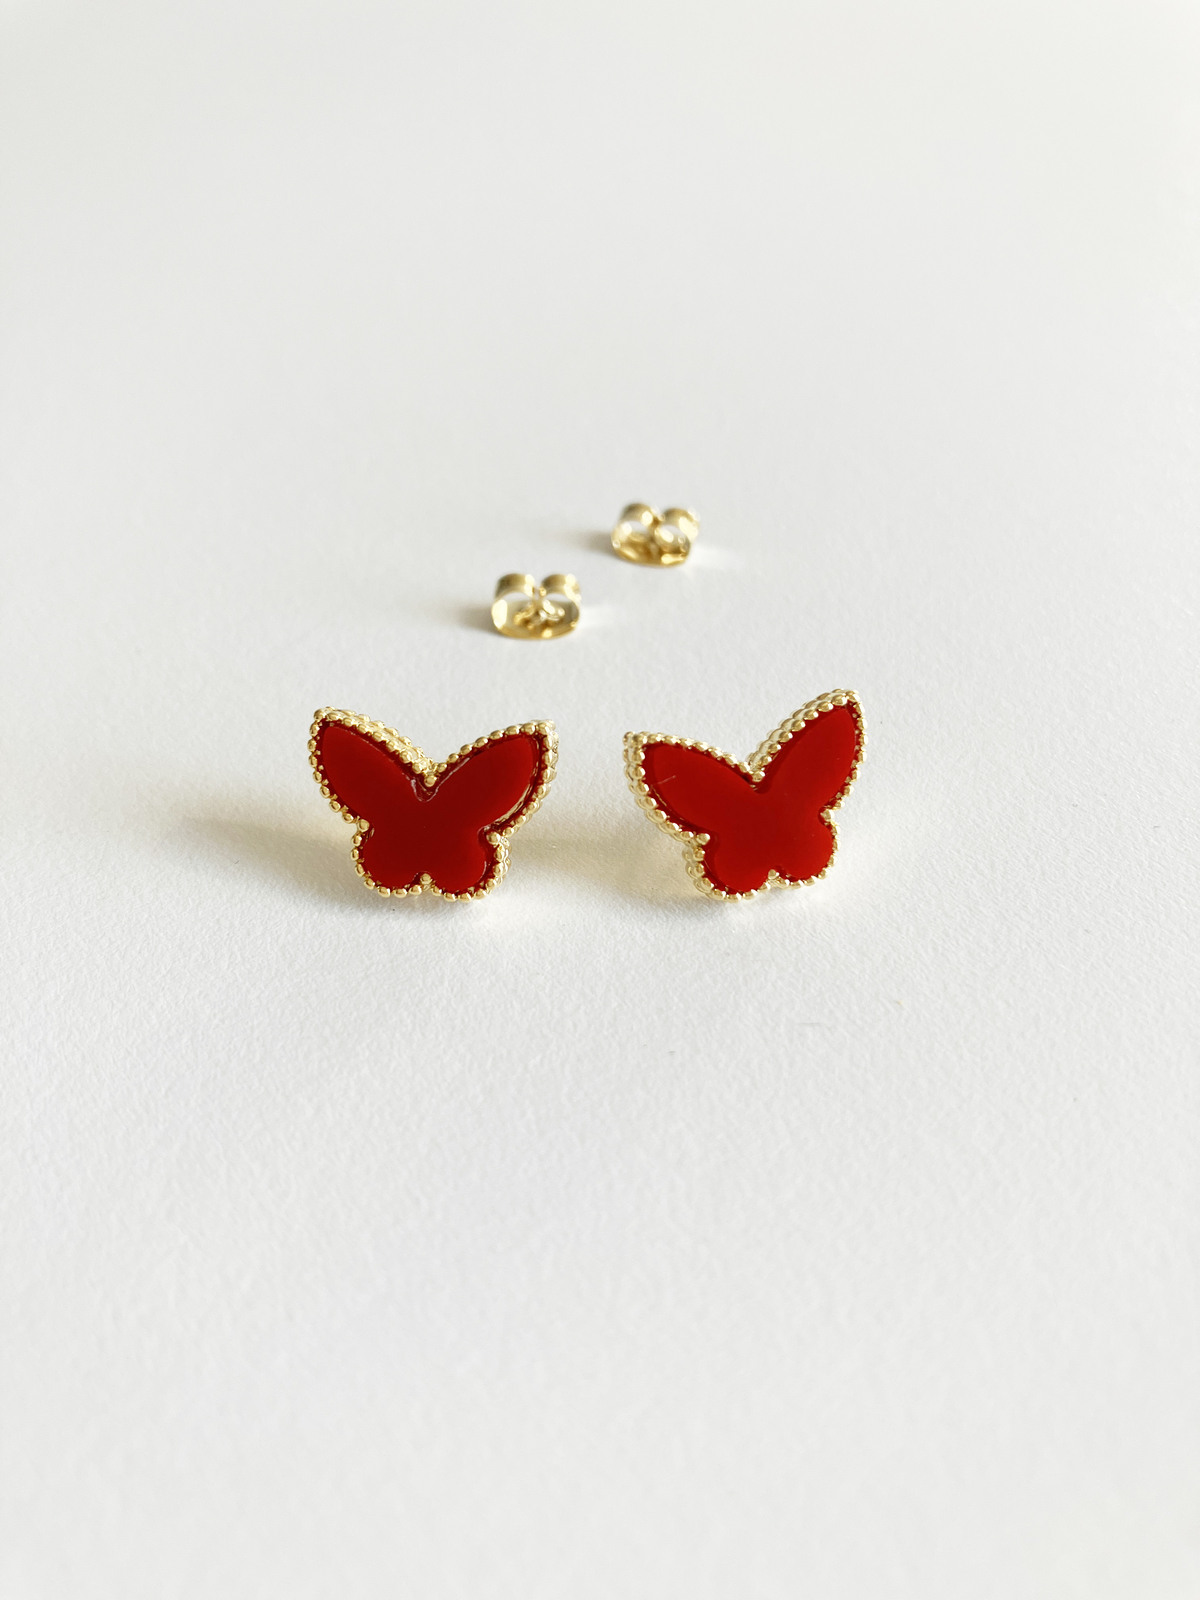 Primary image for Carnelian Butterfly Earrings in Gold